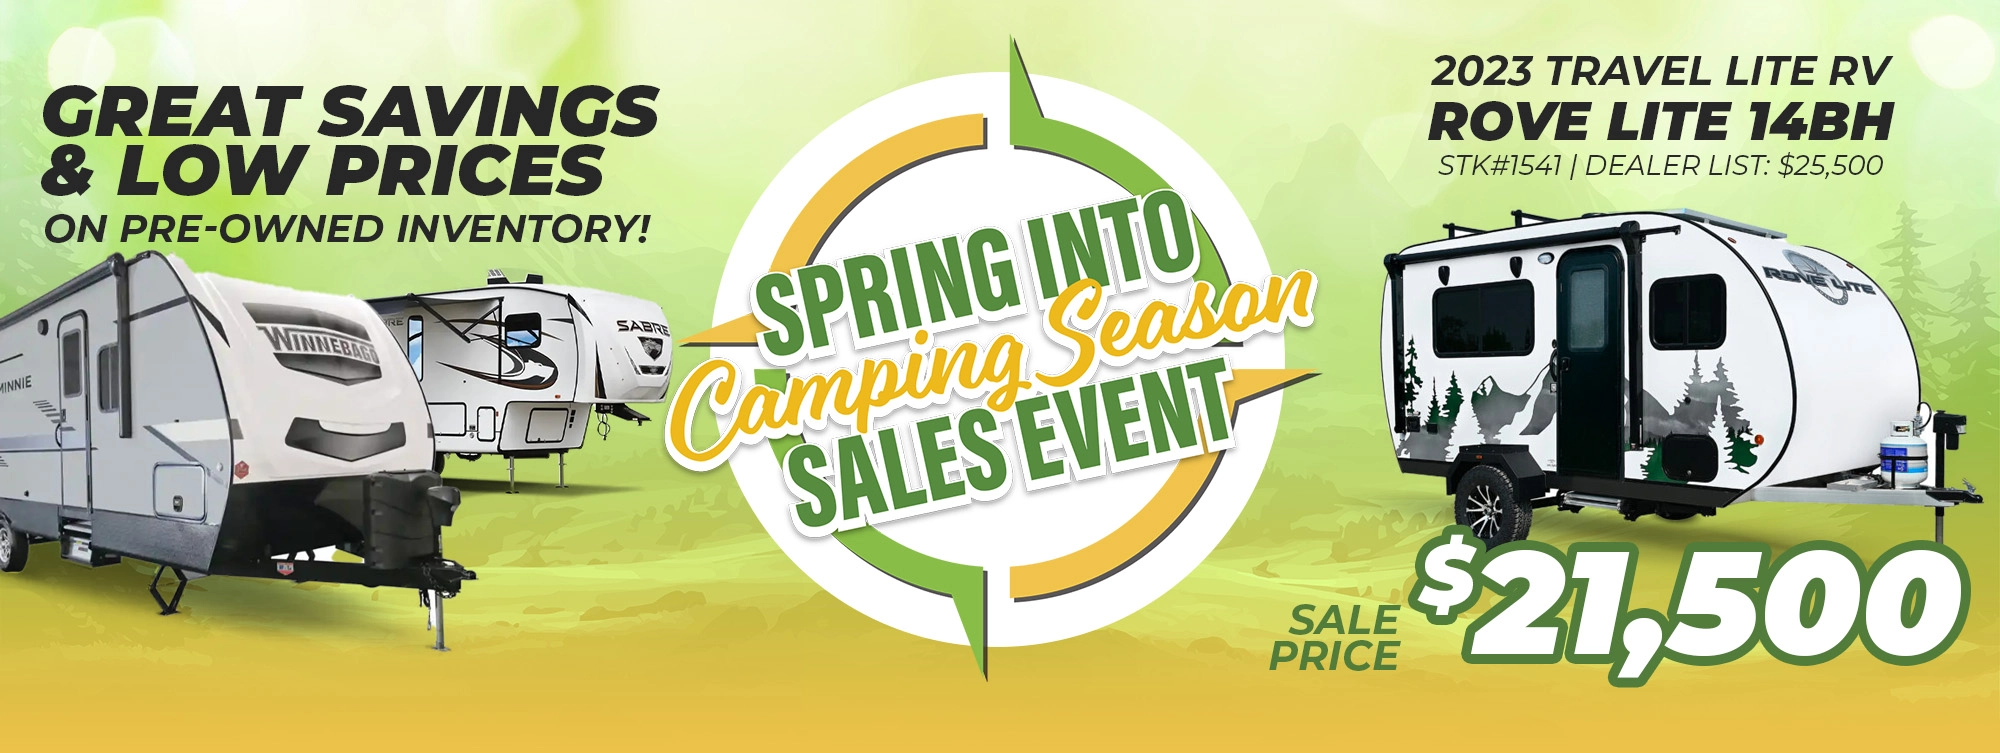 Lerch RV's Spring Into Camping Season Sales Event